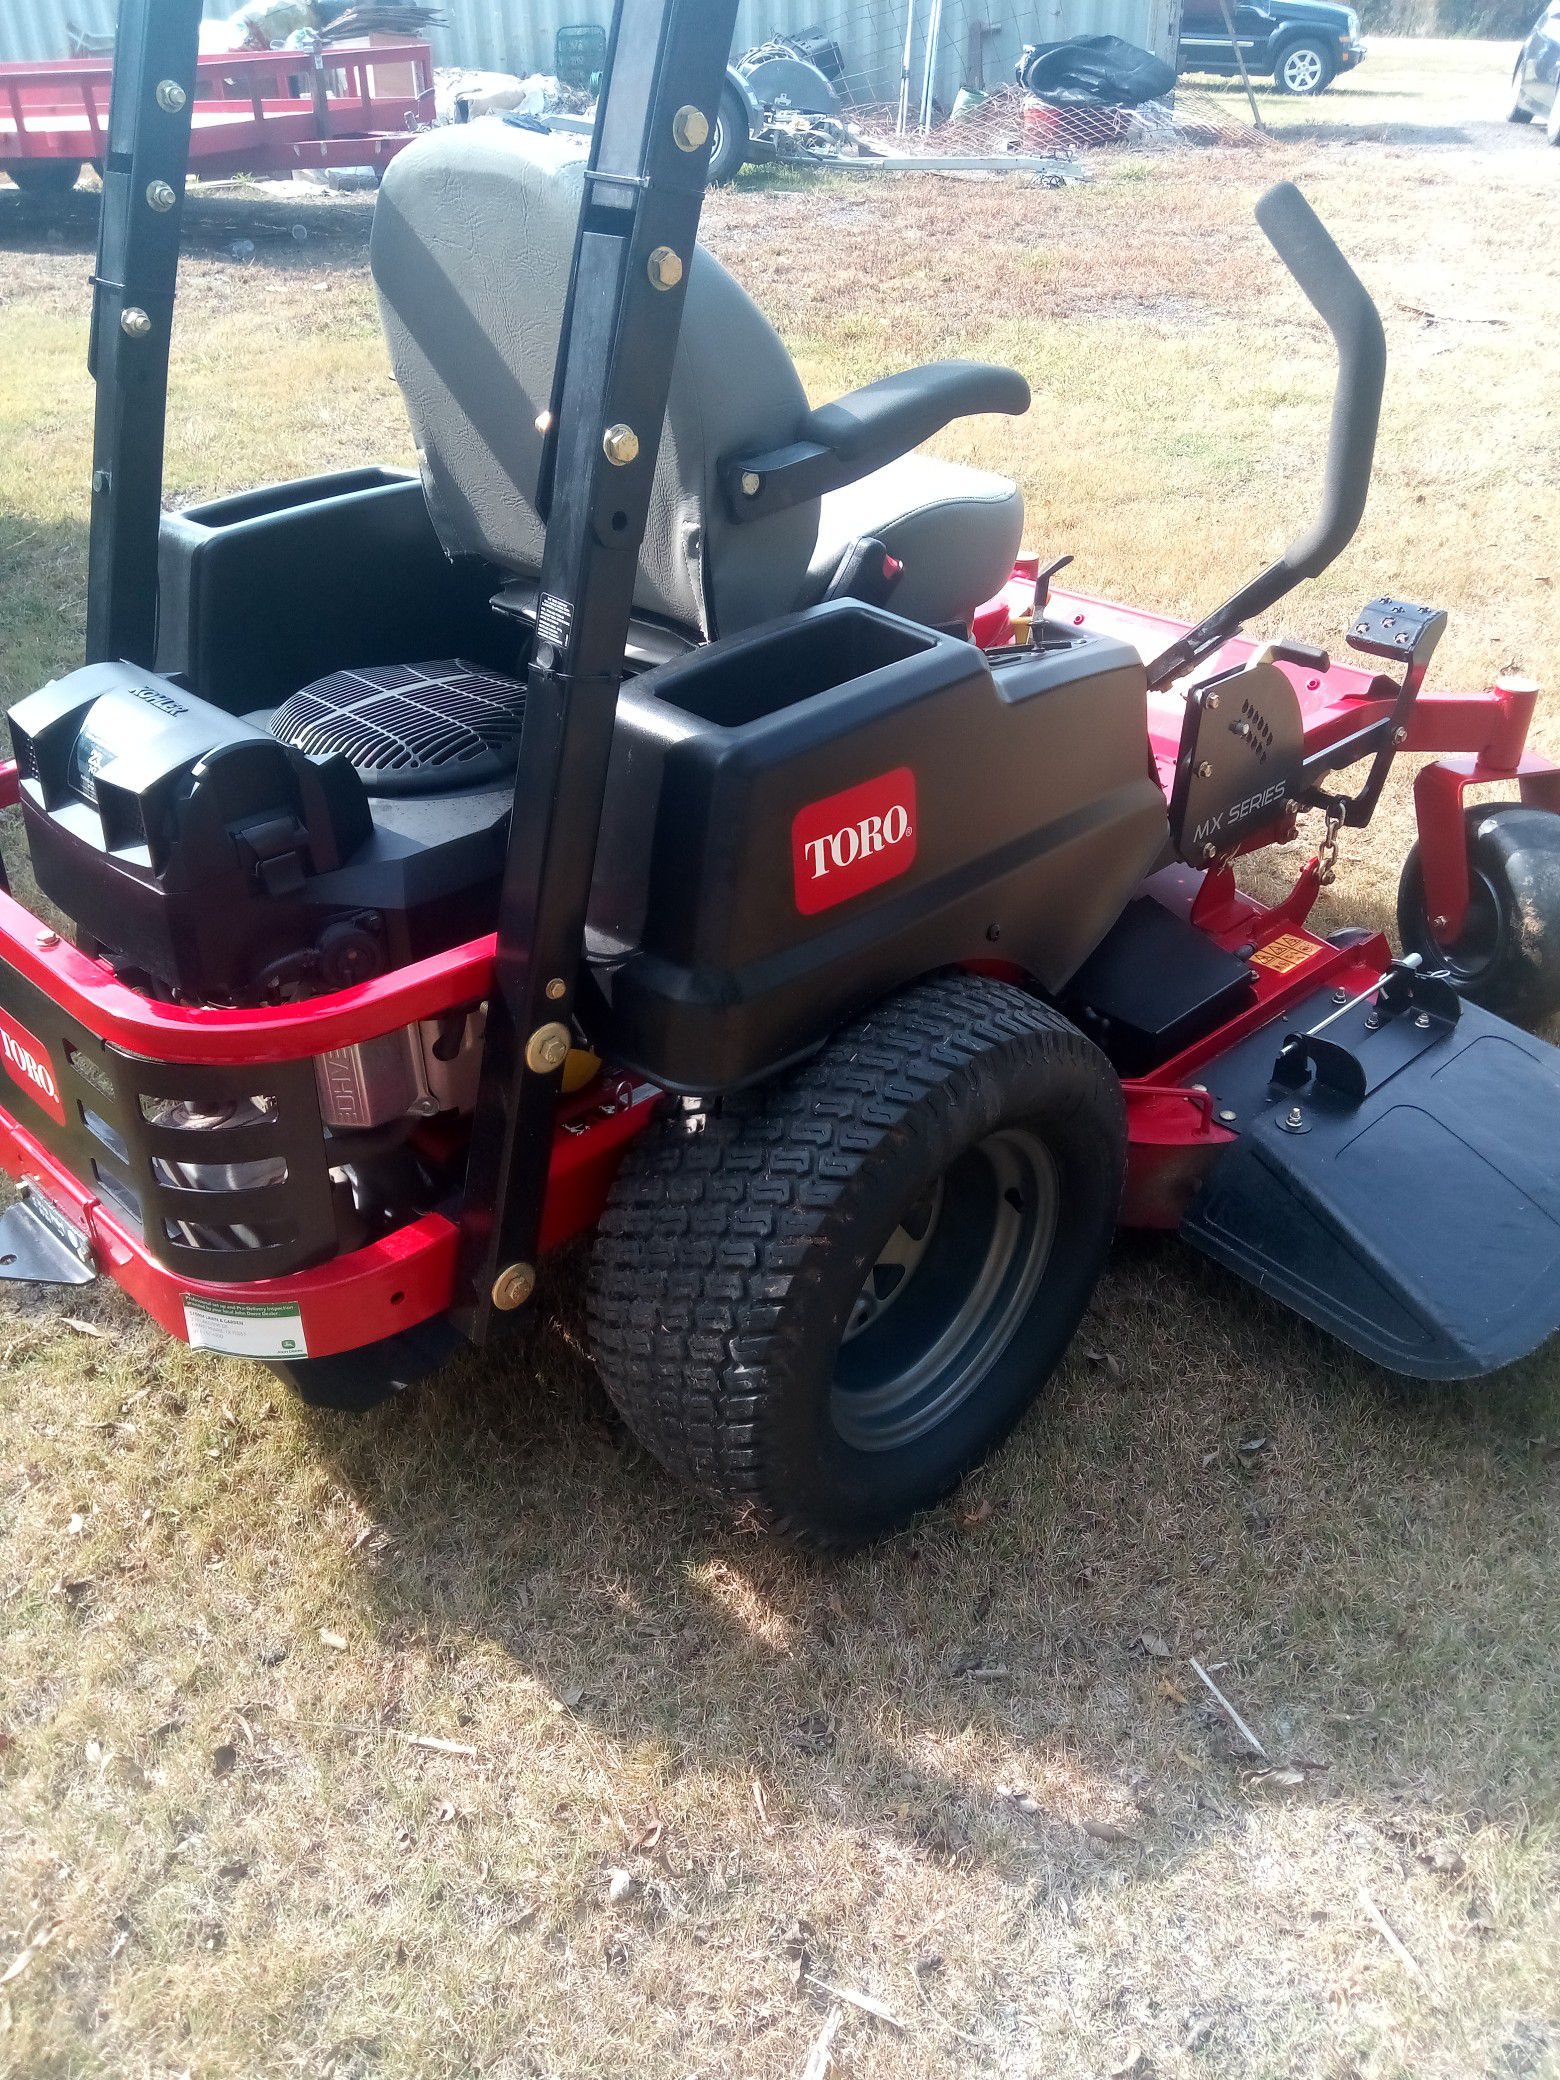 Commercial toro zero turn riding lawn mower